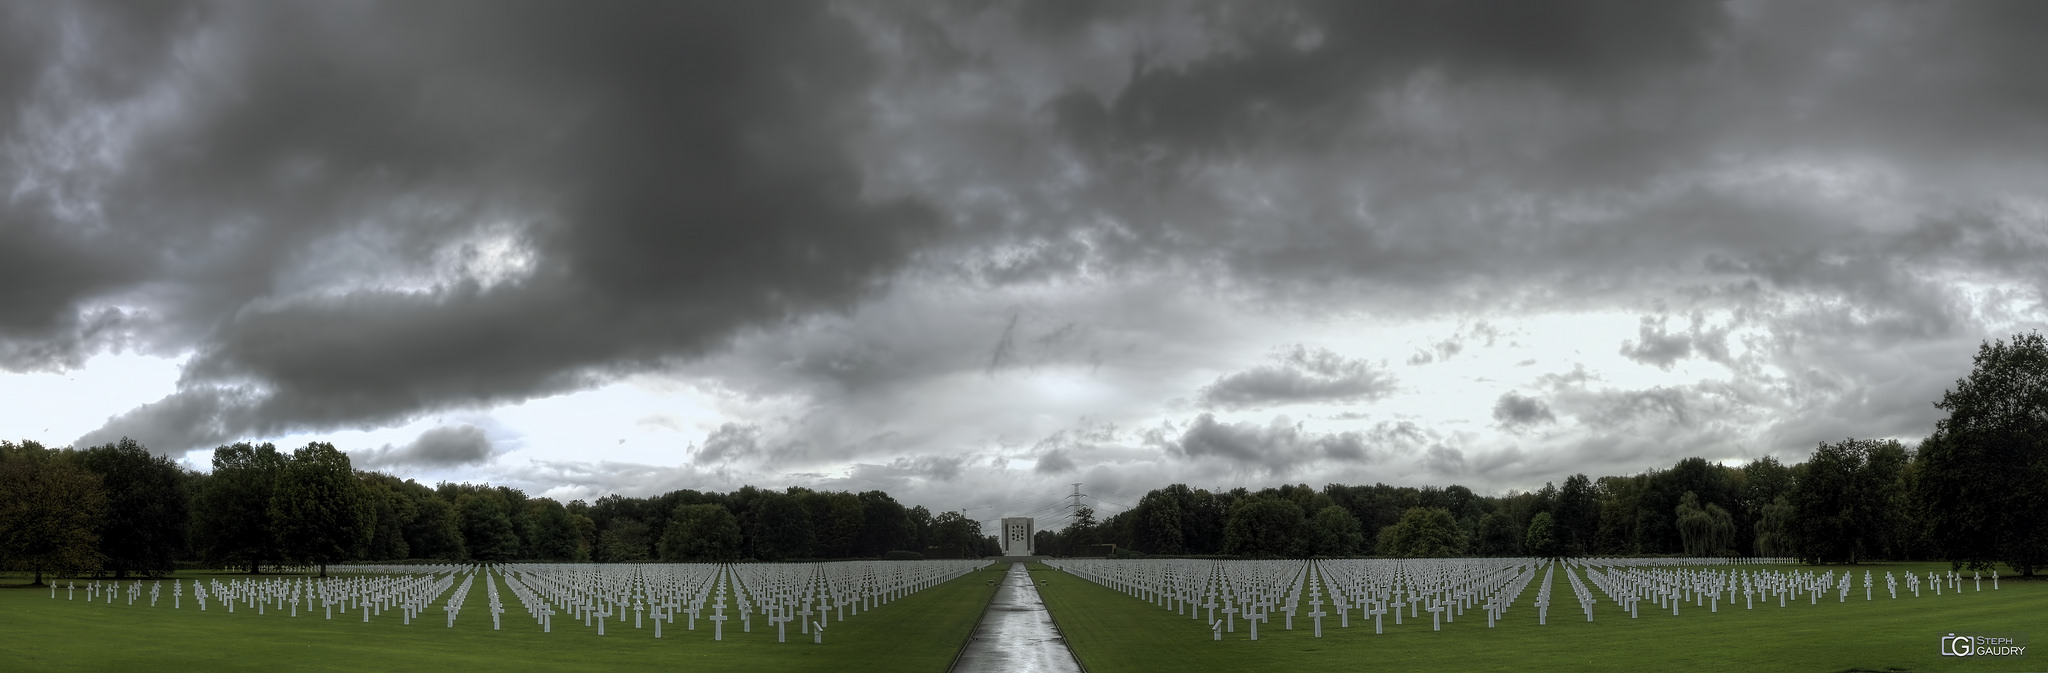 Ardennes American Cemetery and Memorial [Cliquez pour lancer le diaporama]